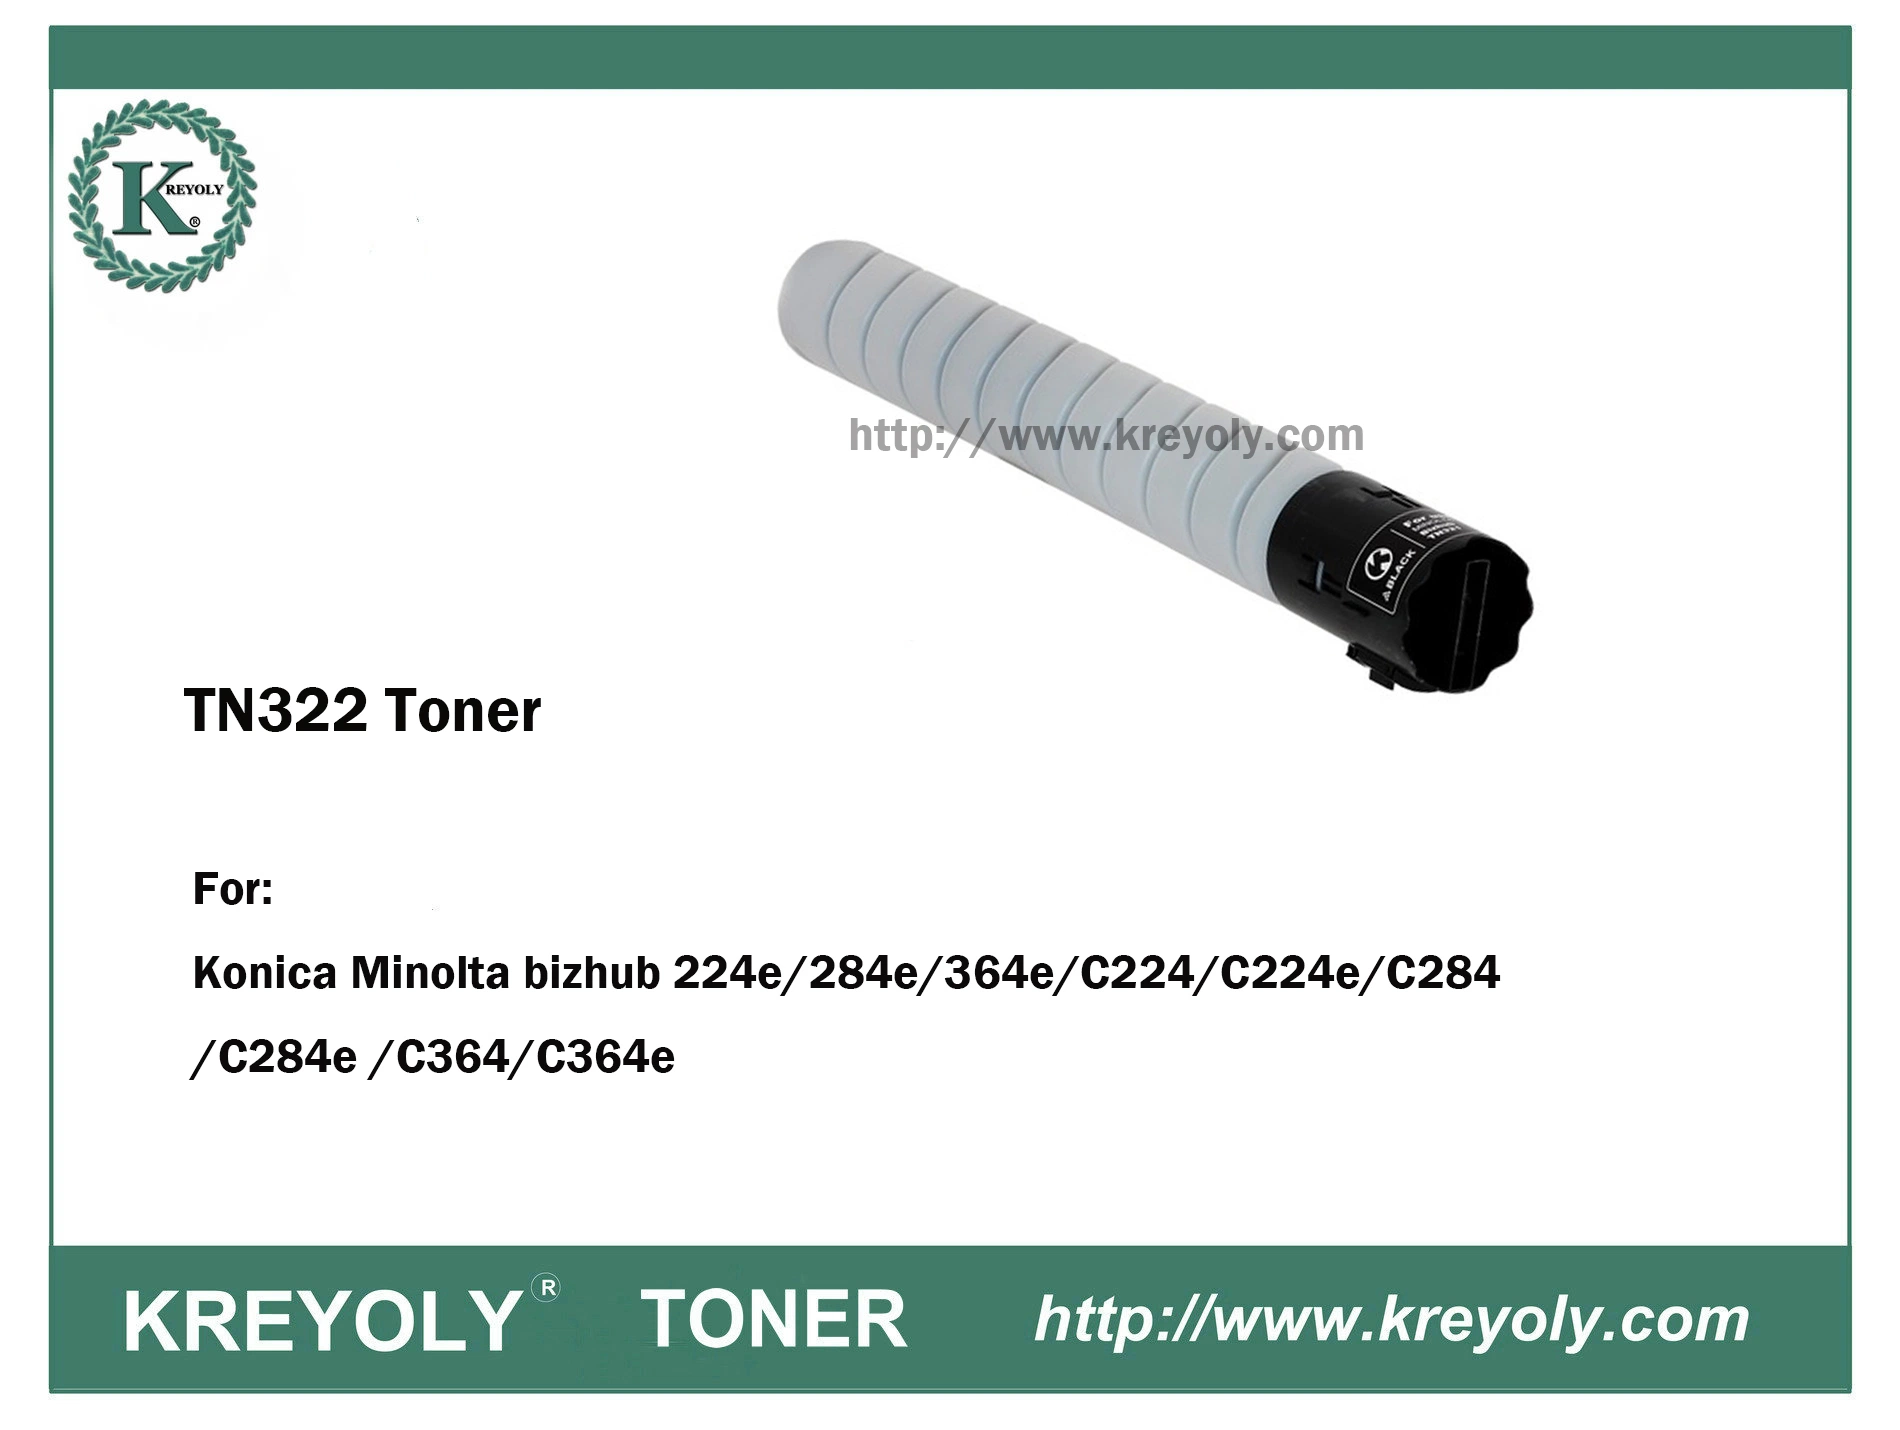 TN322 TONER FOR KONICA MINOLTA Bizhub 224/284/364